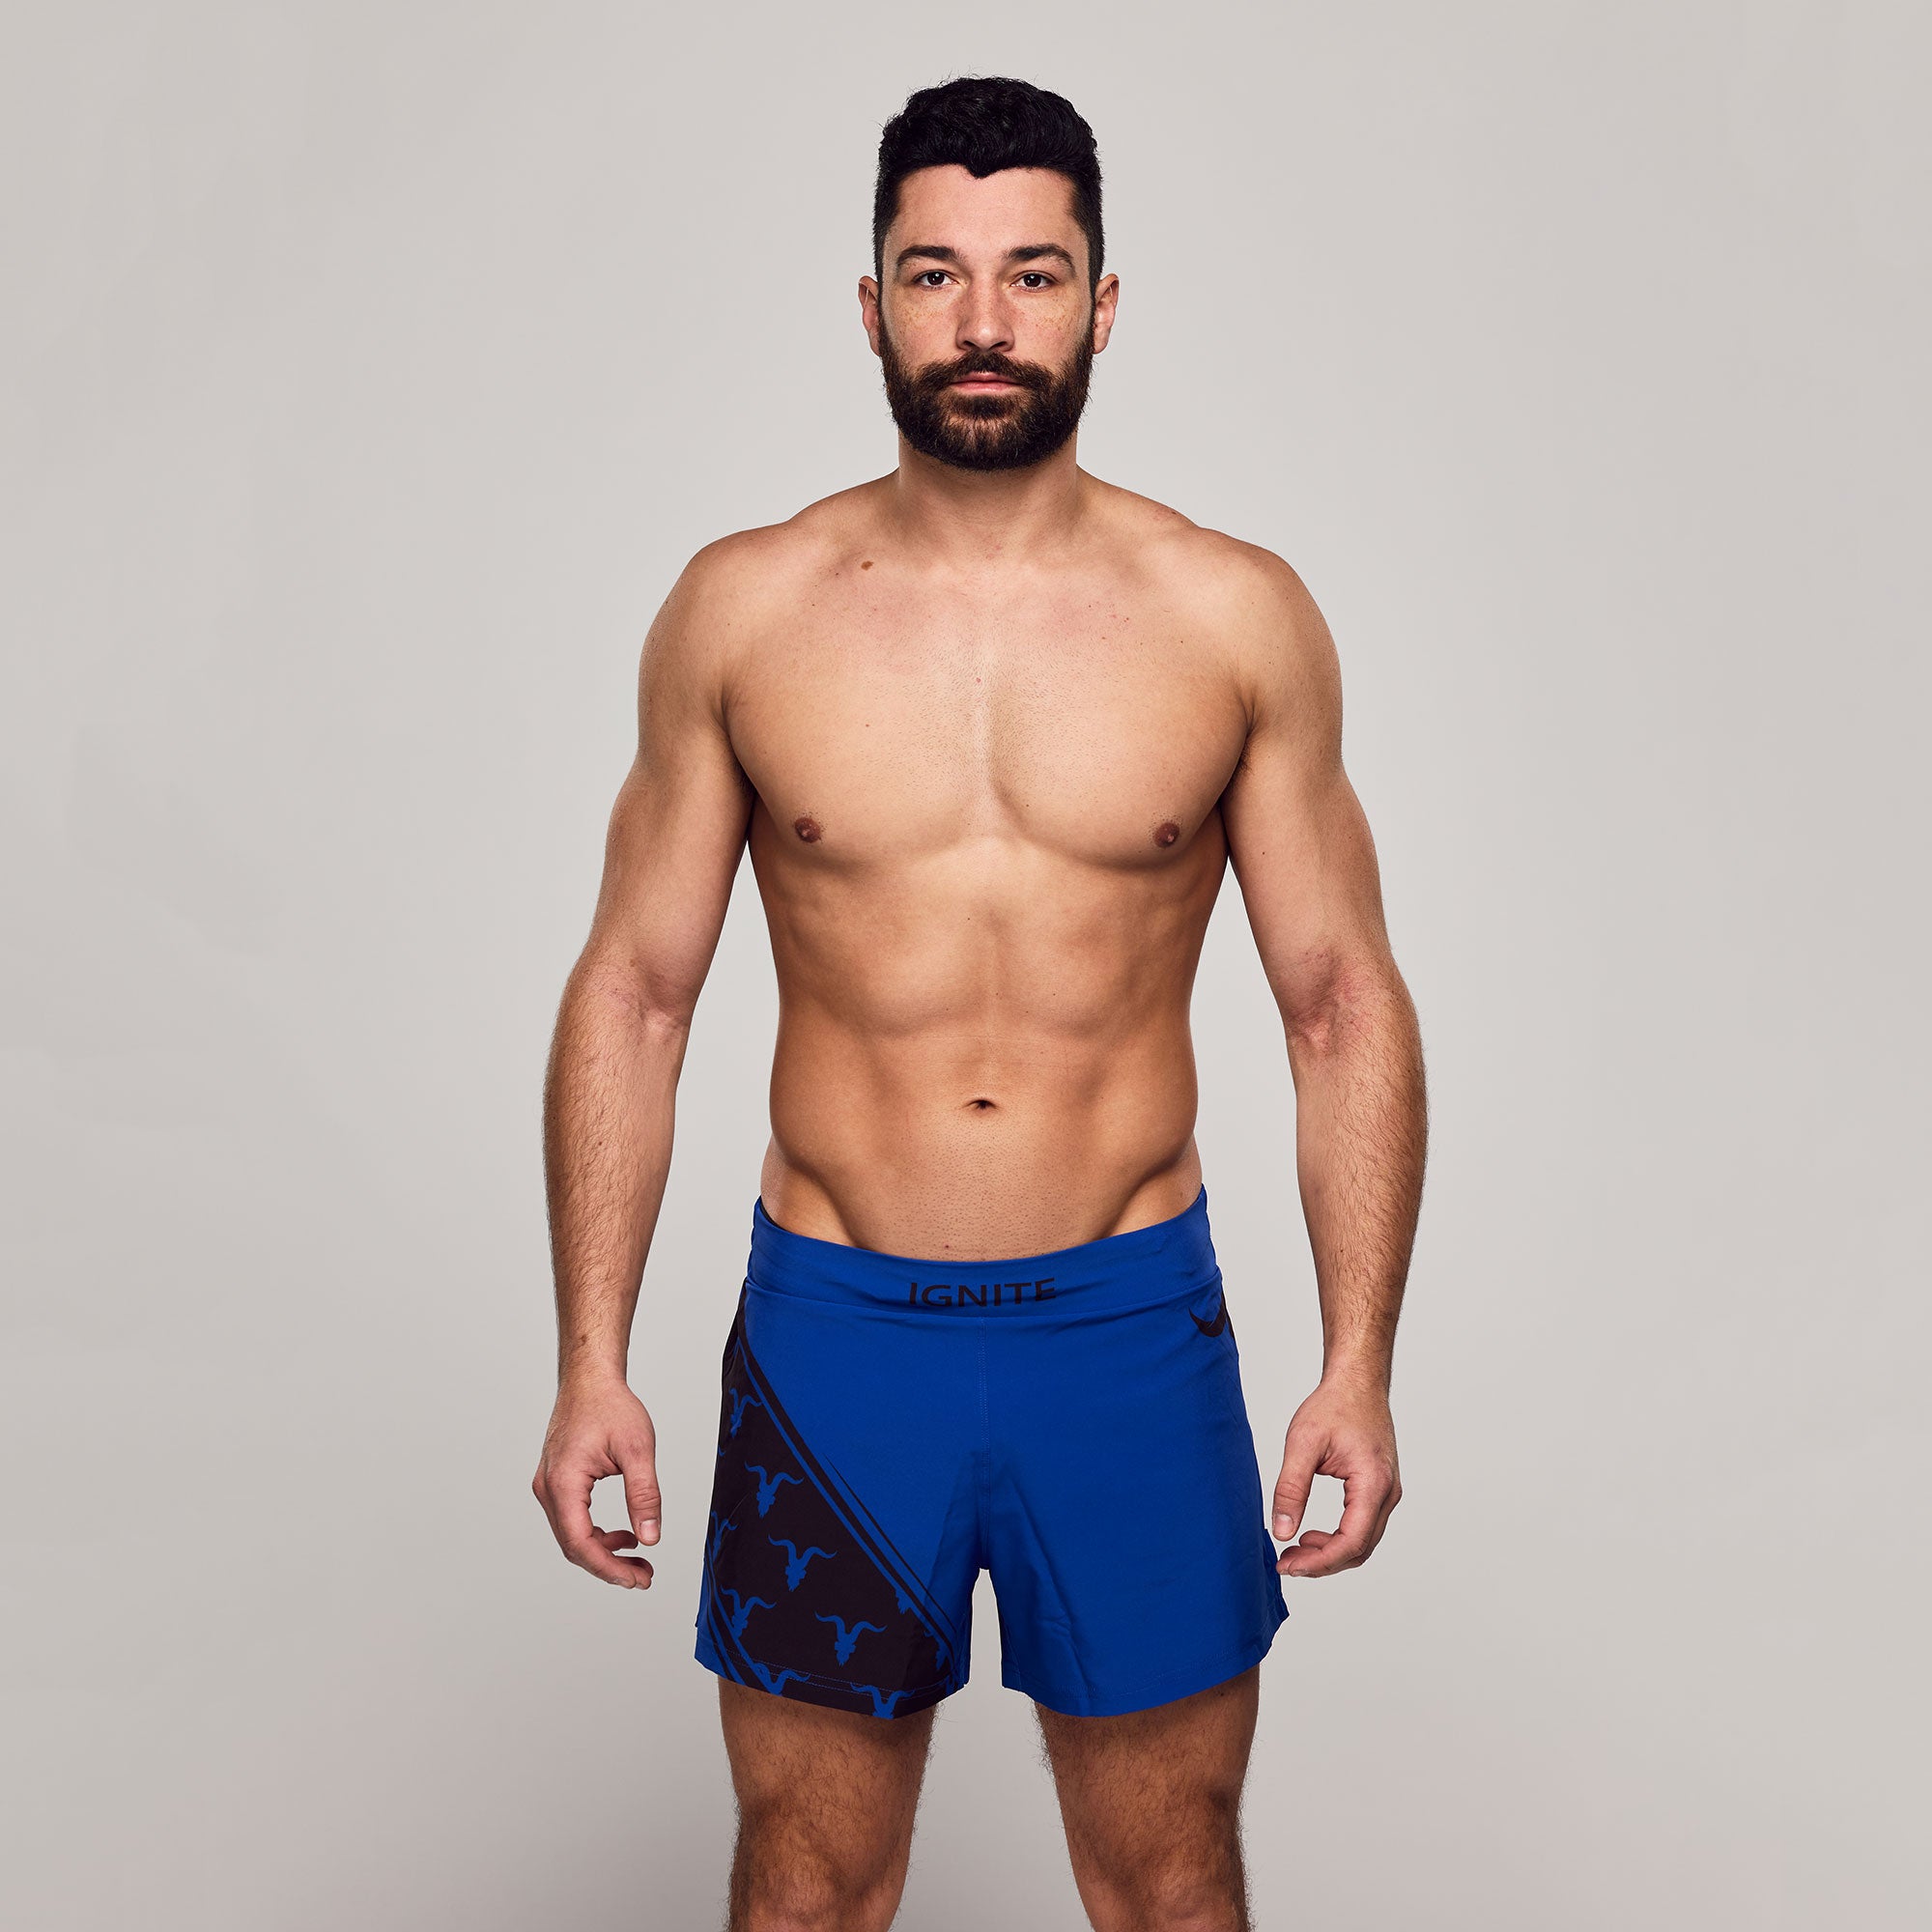 Workout Shorts- Blue